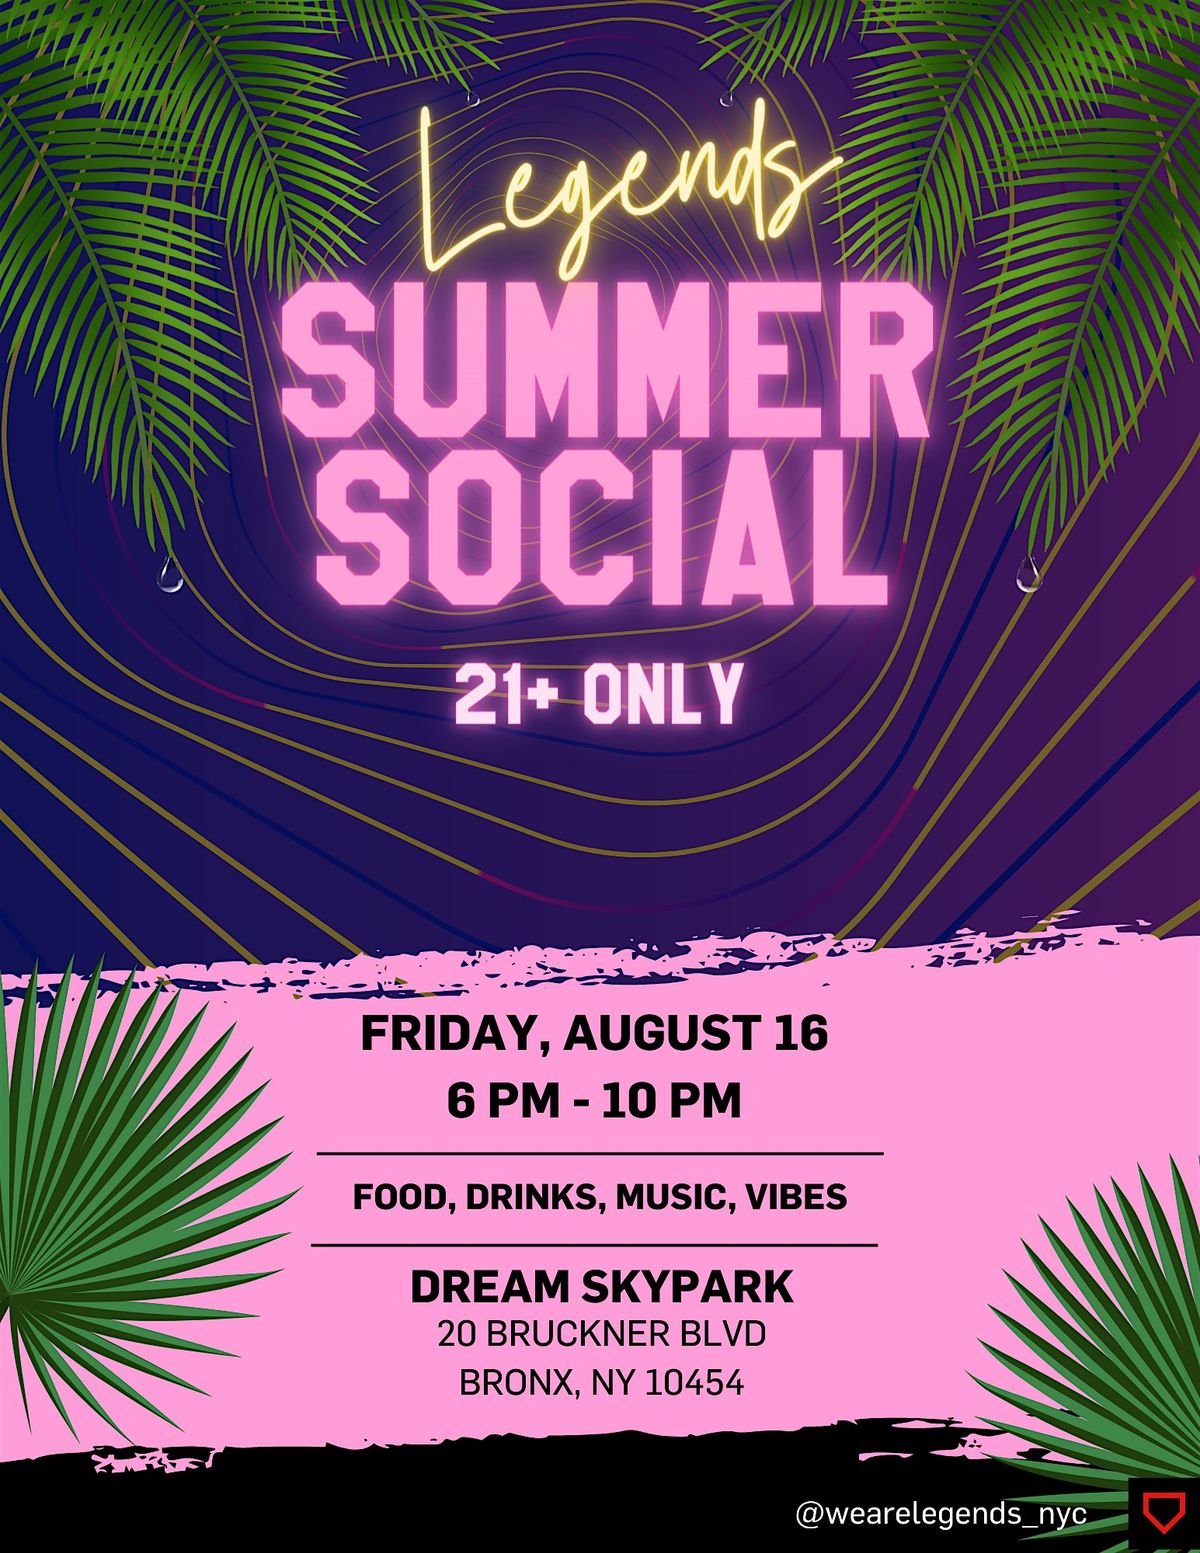 Legends Summer Social (21+ ONLY)